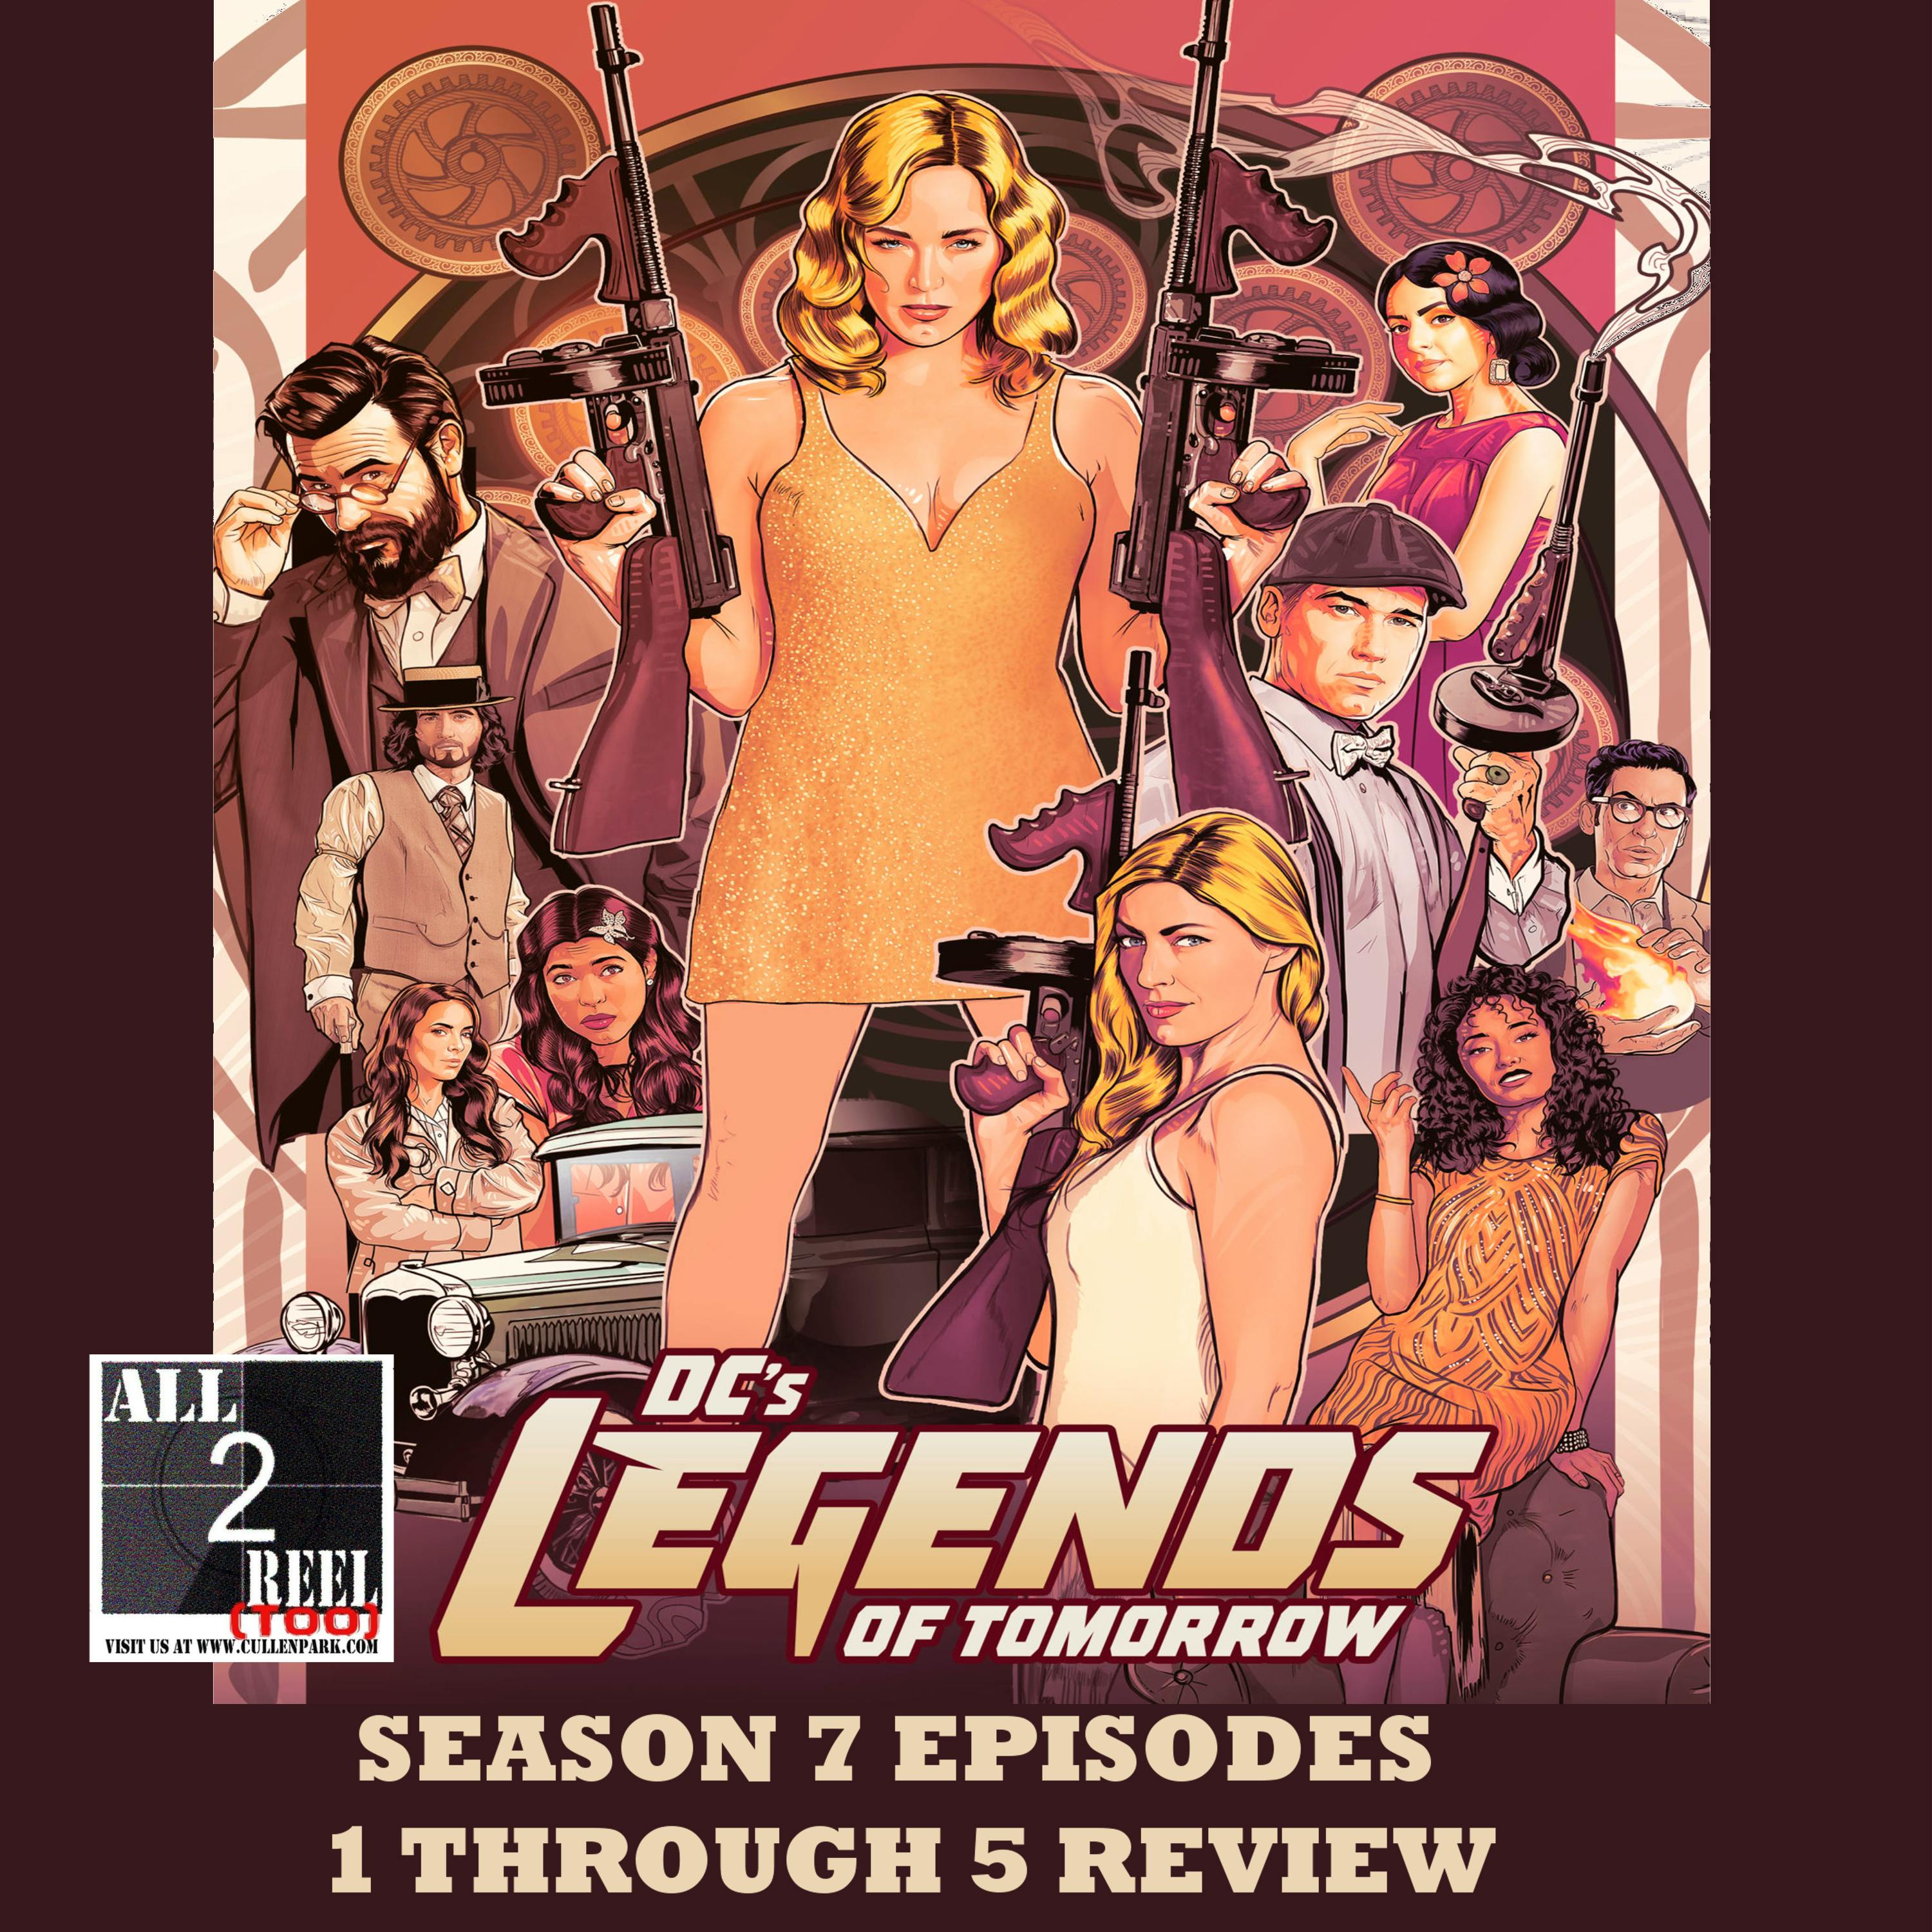 DC's Legends of Tomorrow SEASON 7 EPISODE 1 through 5 REVIEW